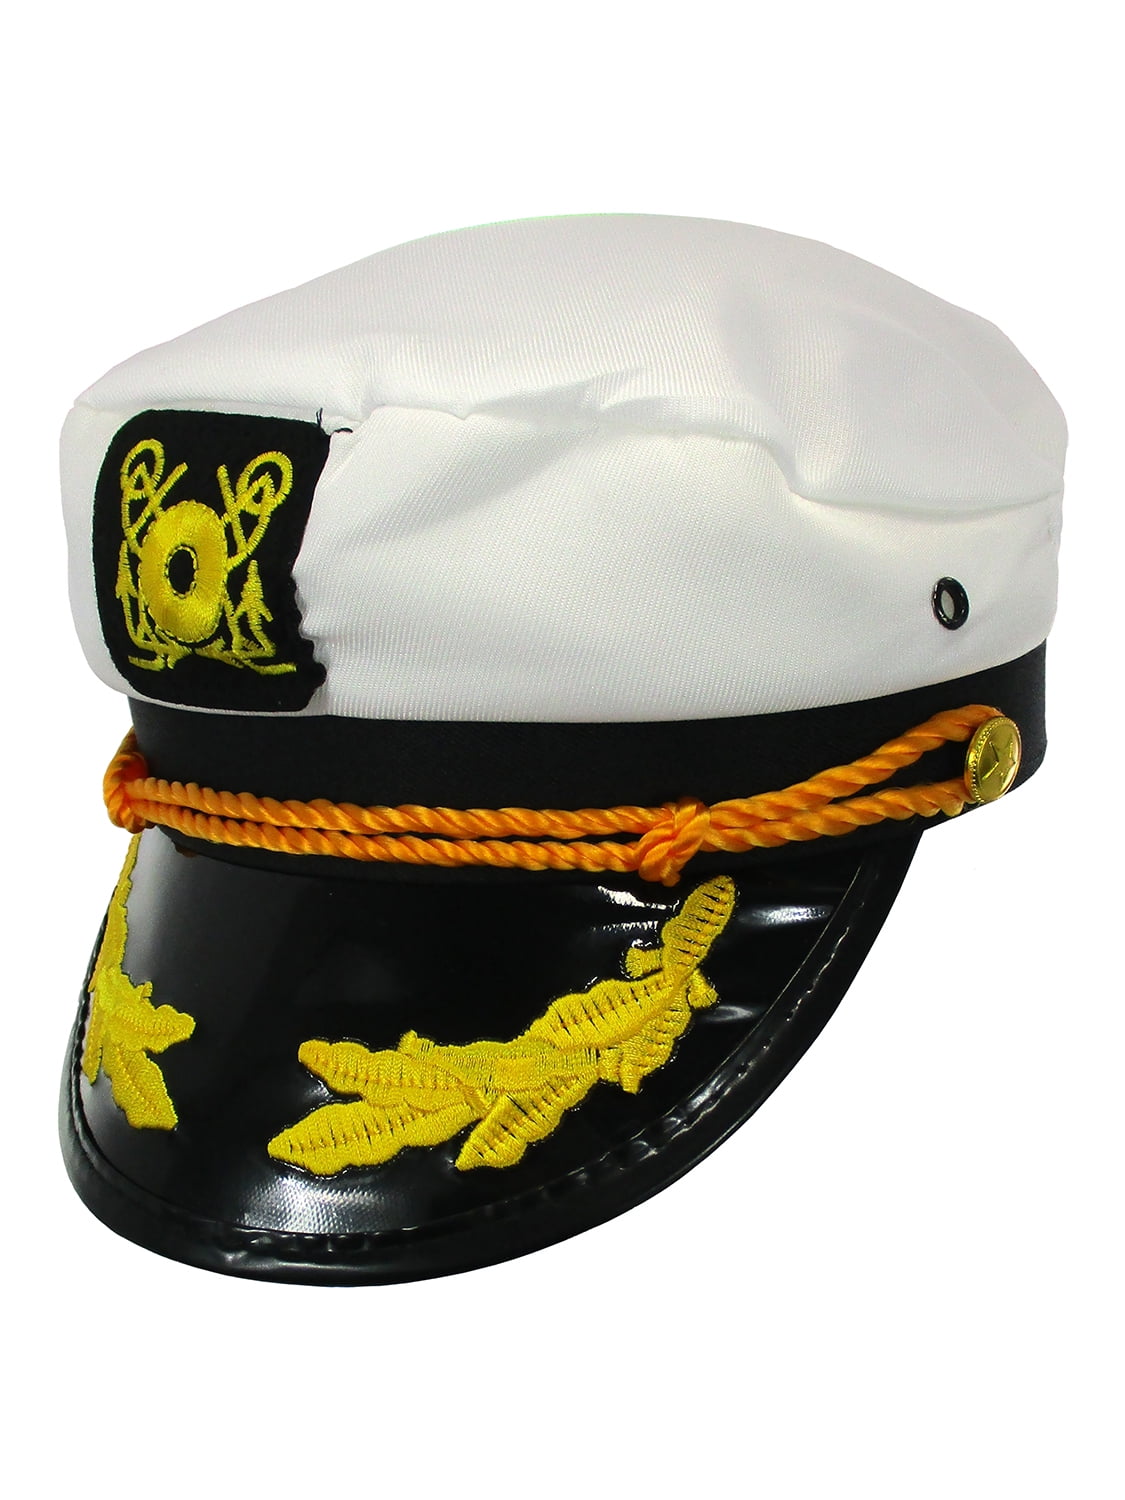 Baseball Cap Cottton Adjustable Strap Captain Yachting Summer Hat Red Navy Gold 